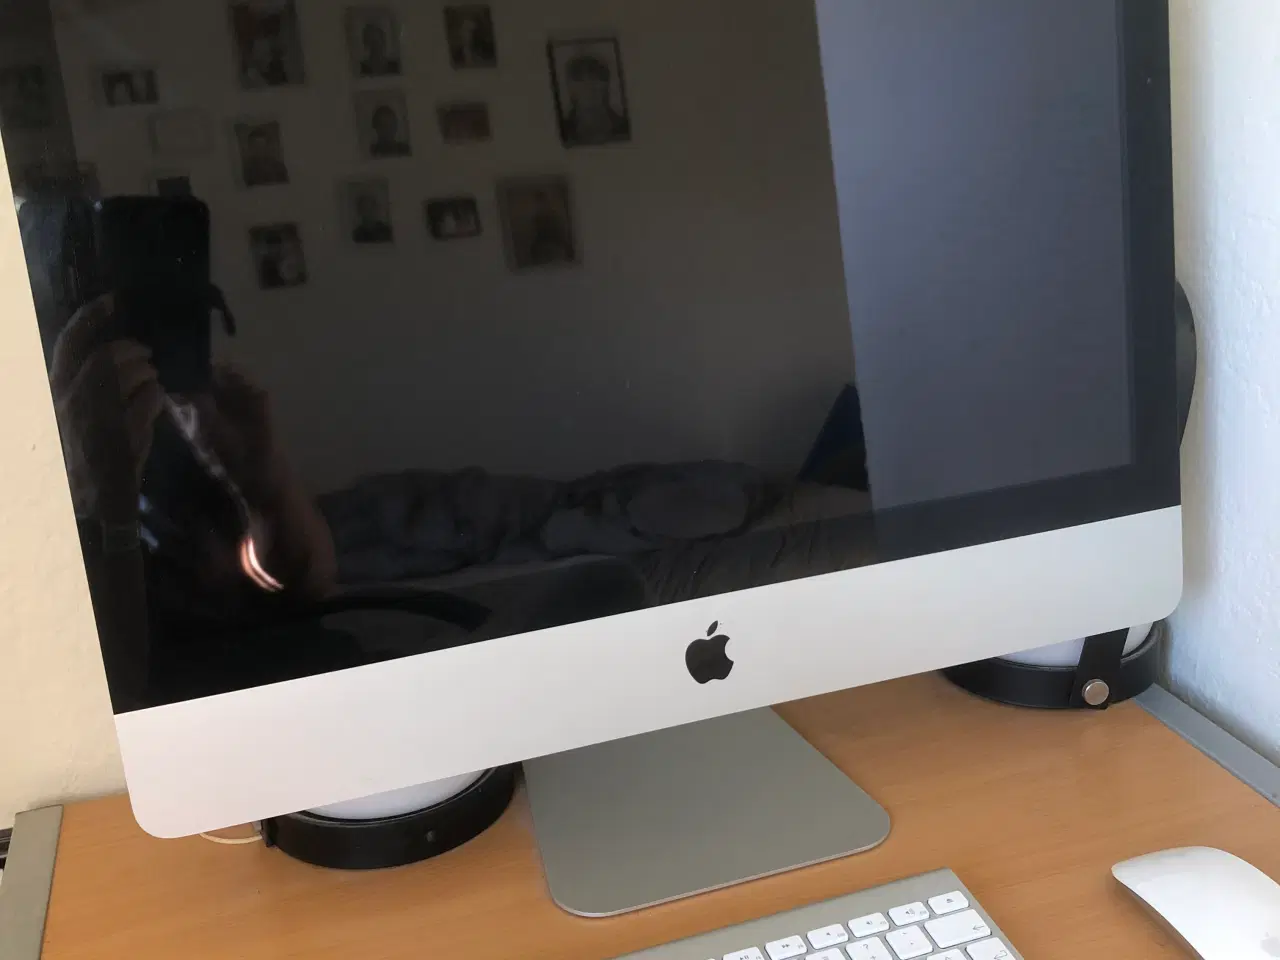 Billede 2 - iMac 21,5-inch LED 16:9 widescreen computer 